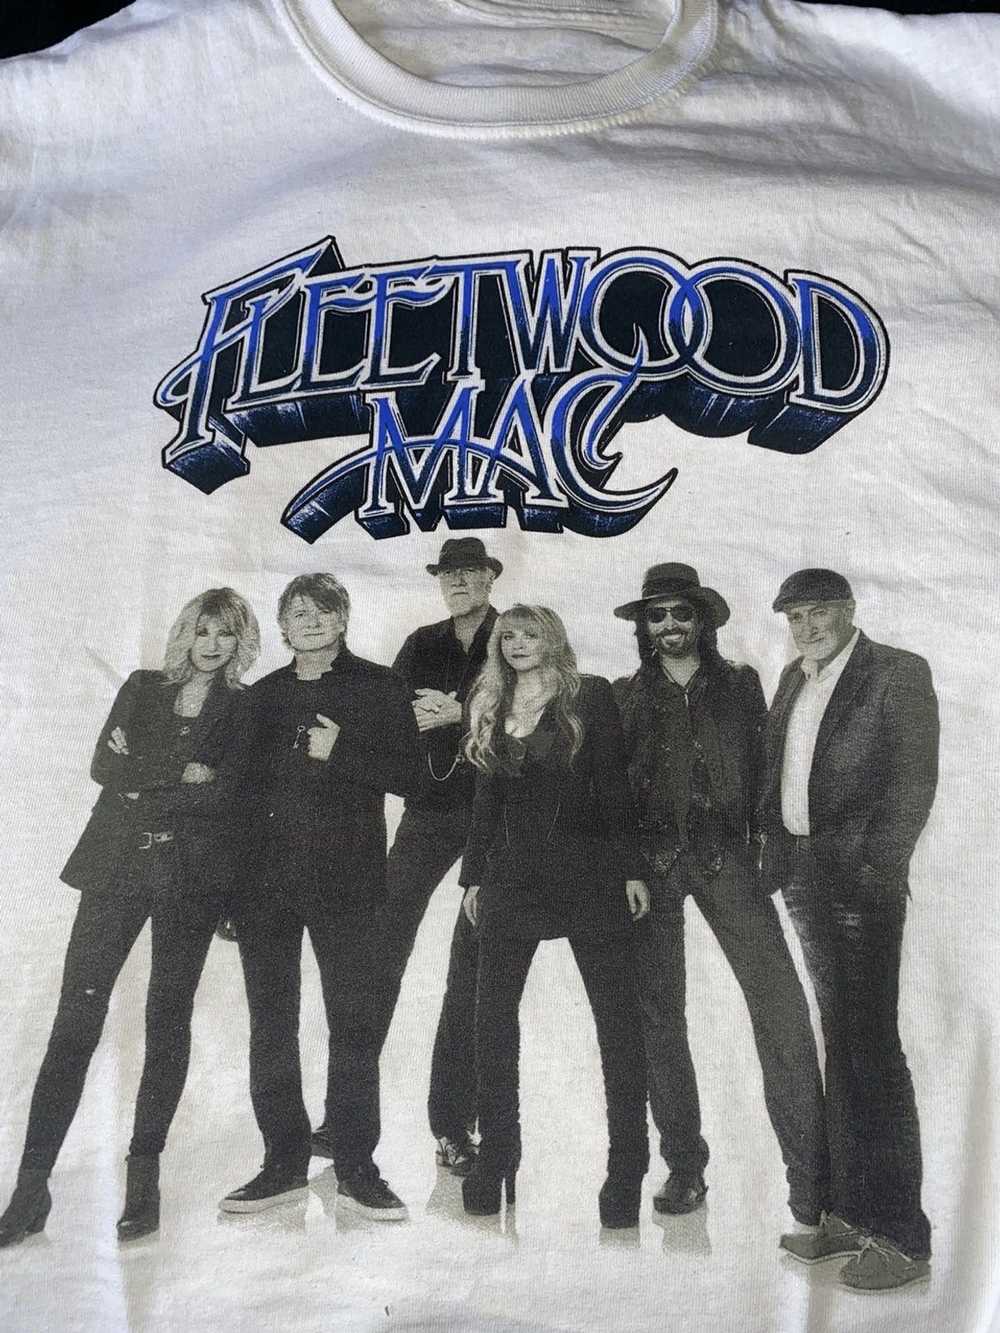 Band Tees Fleetwood Mac - 2018/19 Tour Shirt - image 3